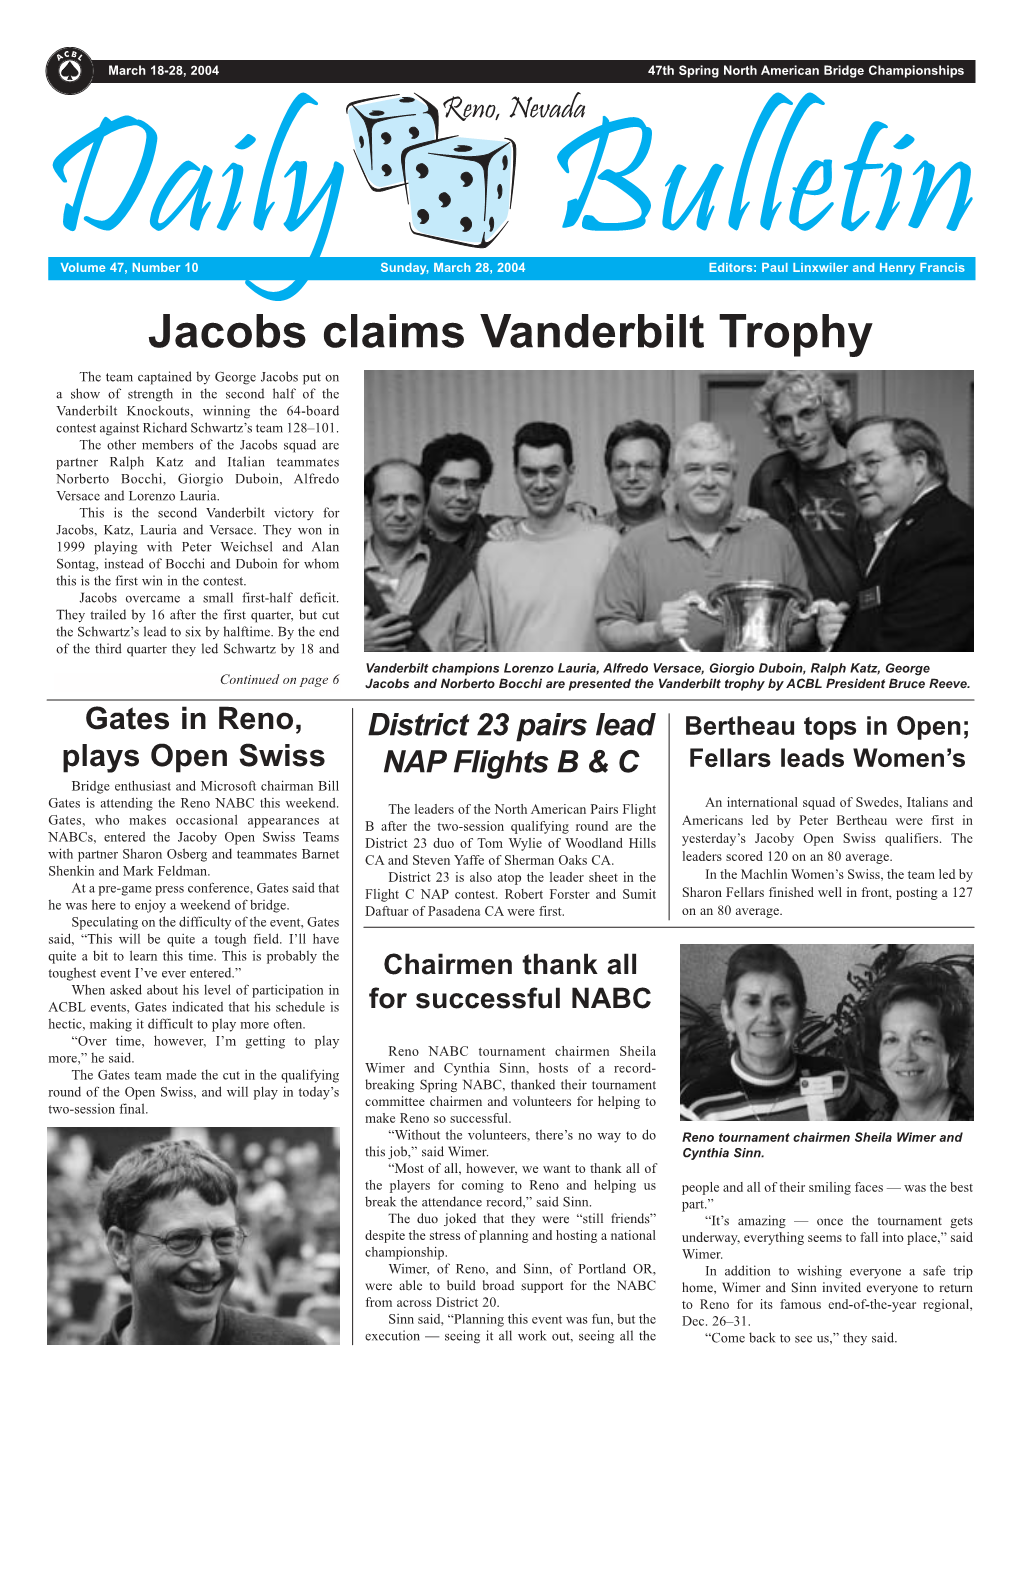 Jacobs Claims Vanderbilt Trophy